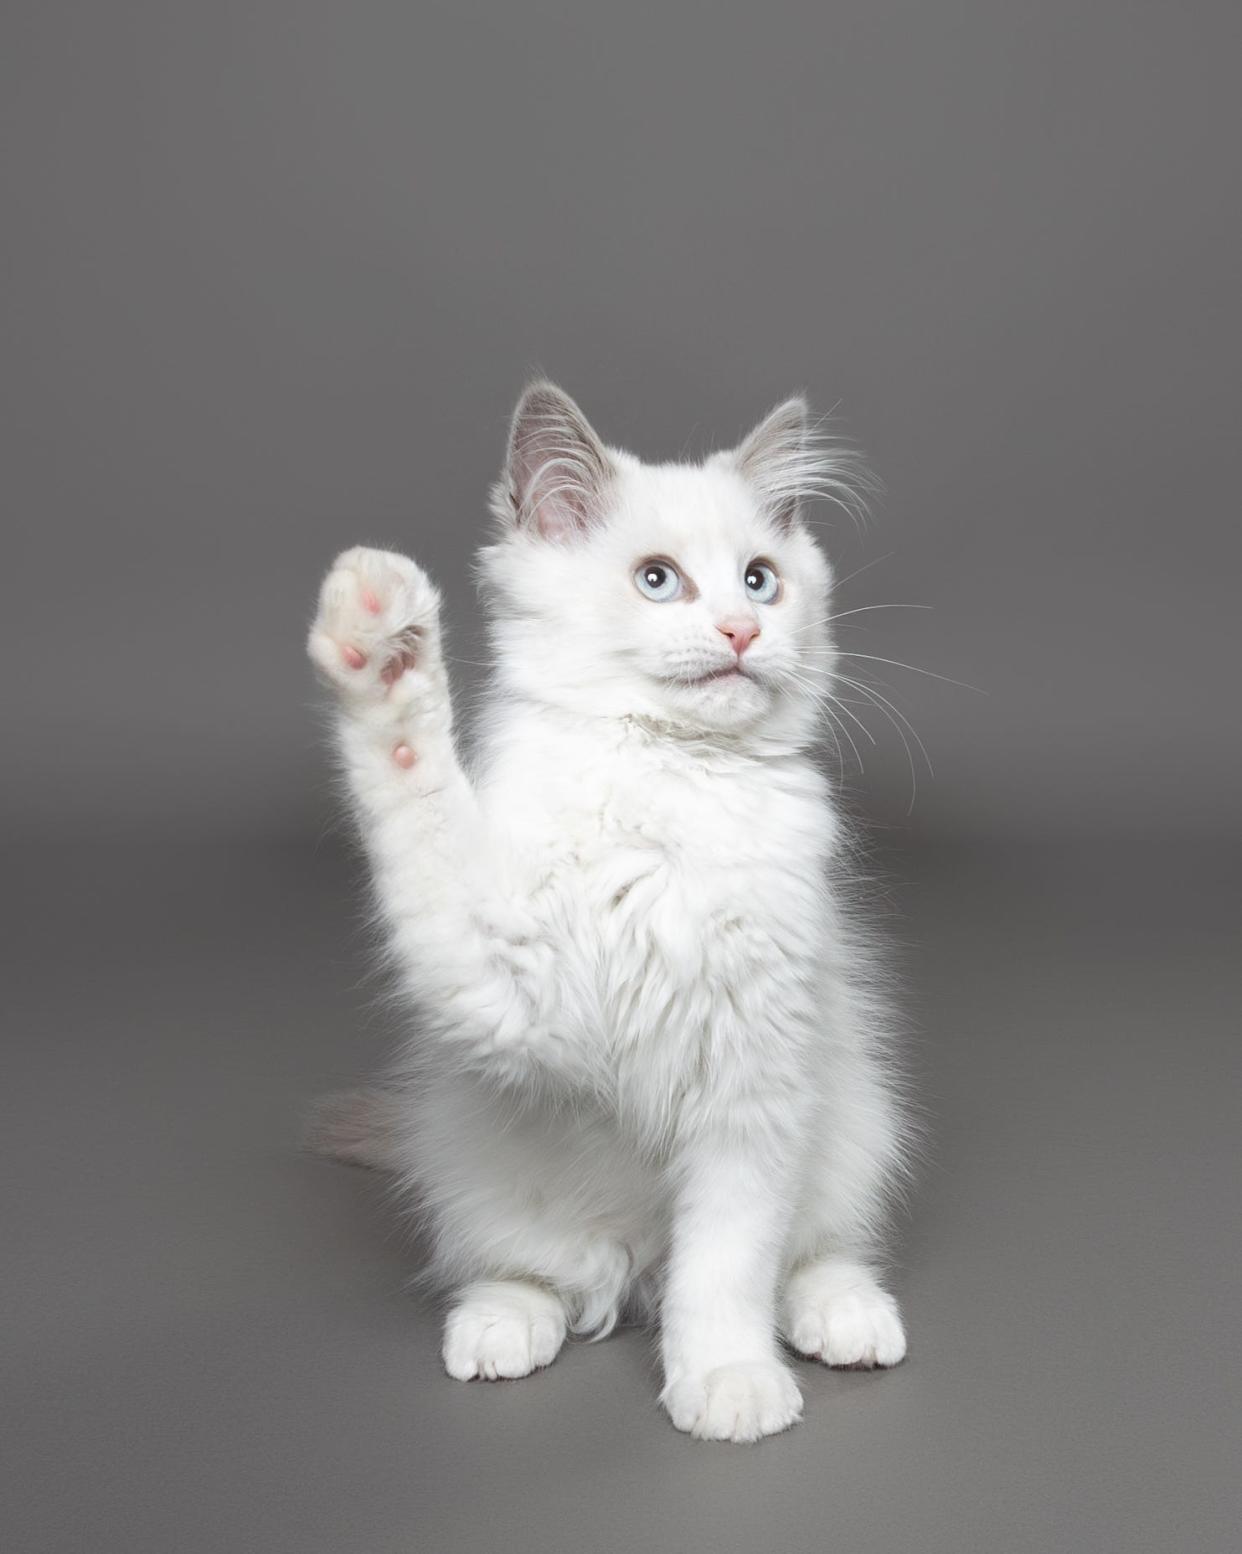 A white cat raises its paw